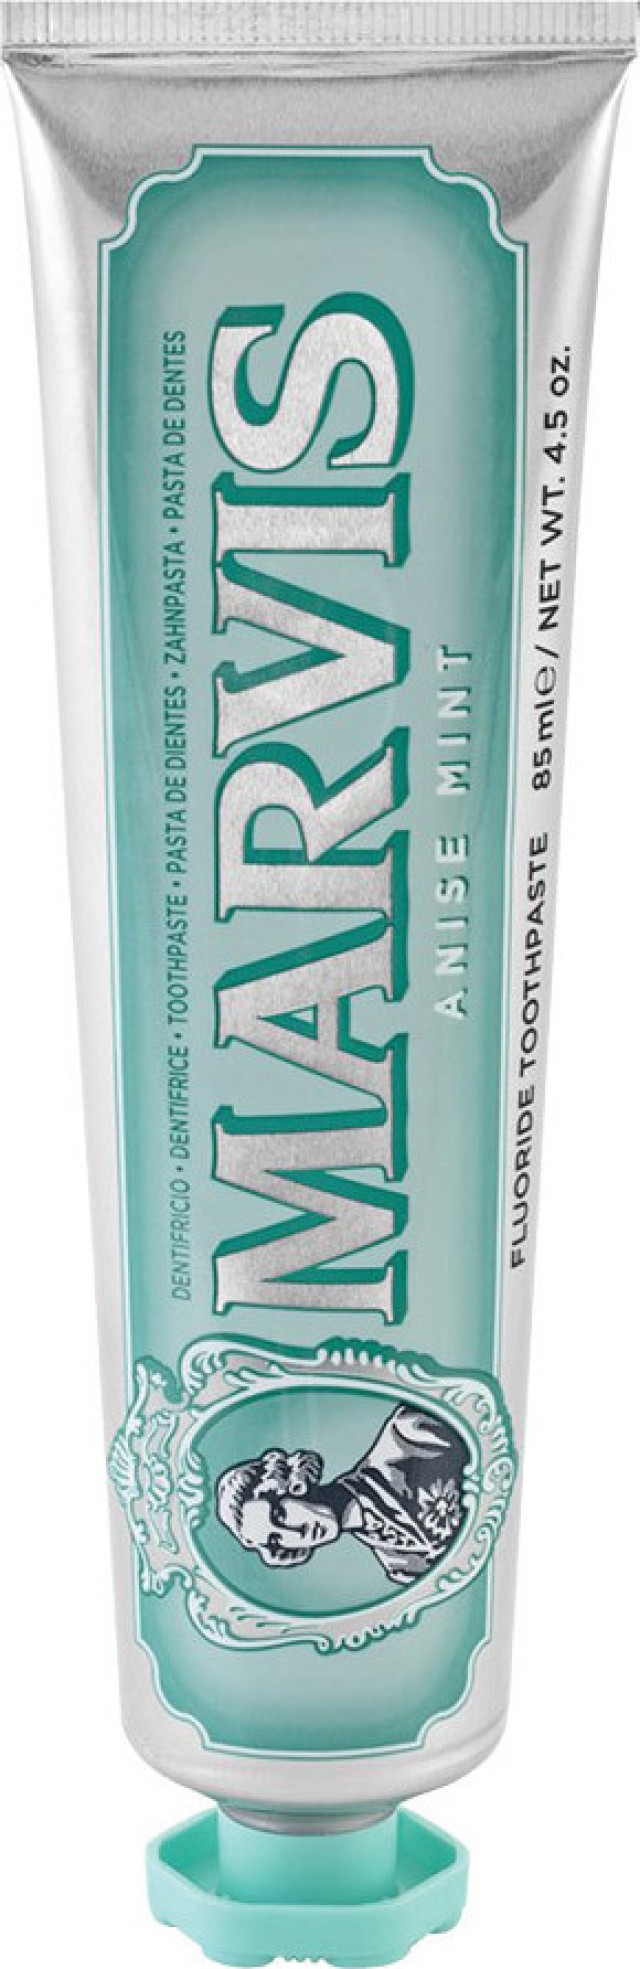 Marvis Anise Mint Toothpaste Οδοντόκρεμα με Γεύση Γλυκάνισο-Μέντα για Λεύκανση και Δροσερή Αναπνοή 85ml